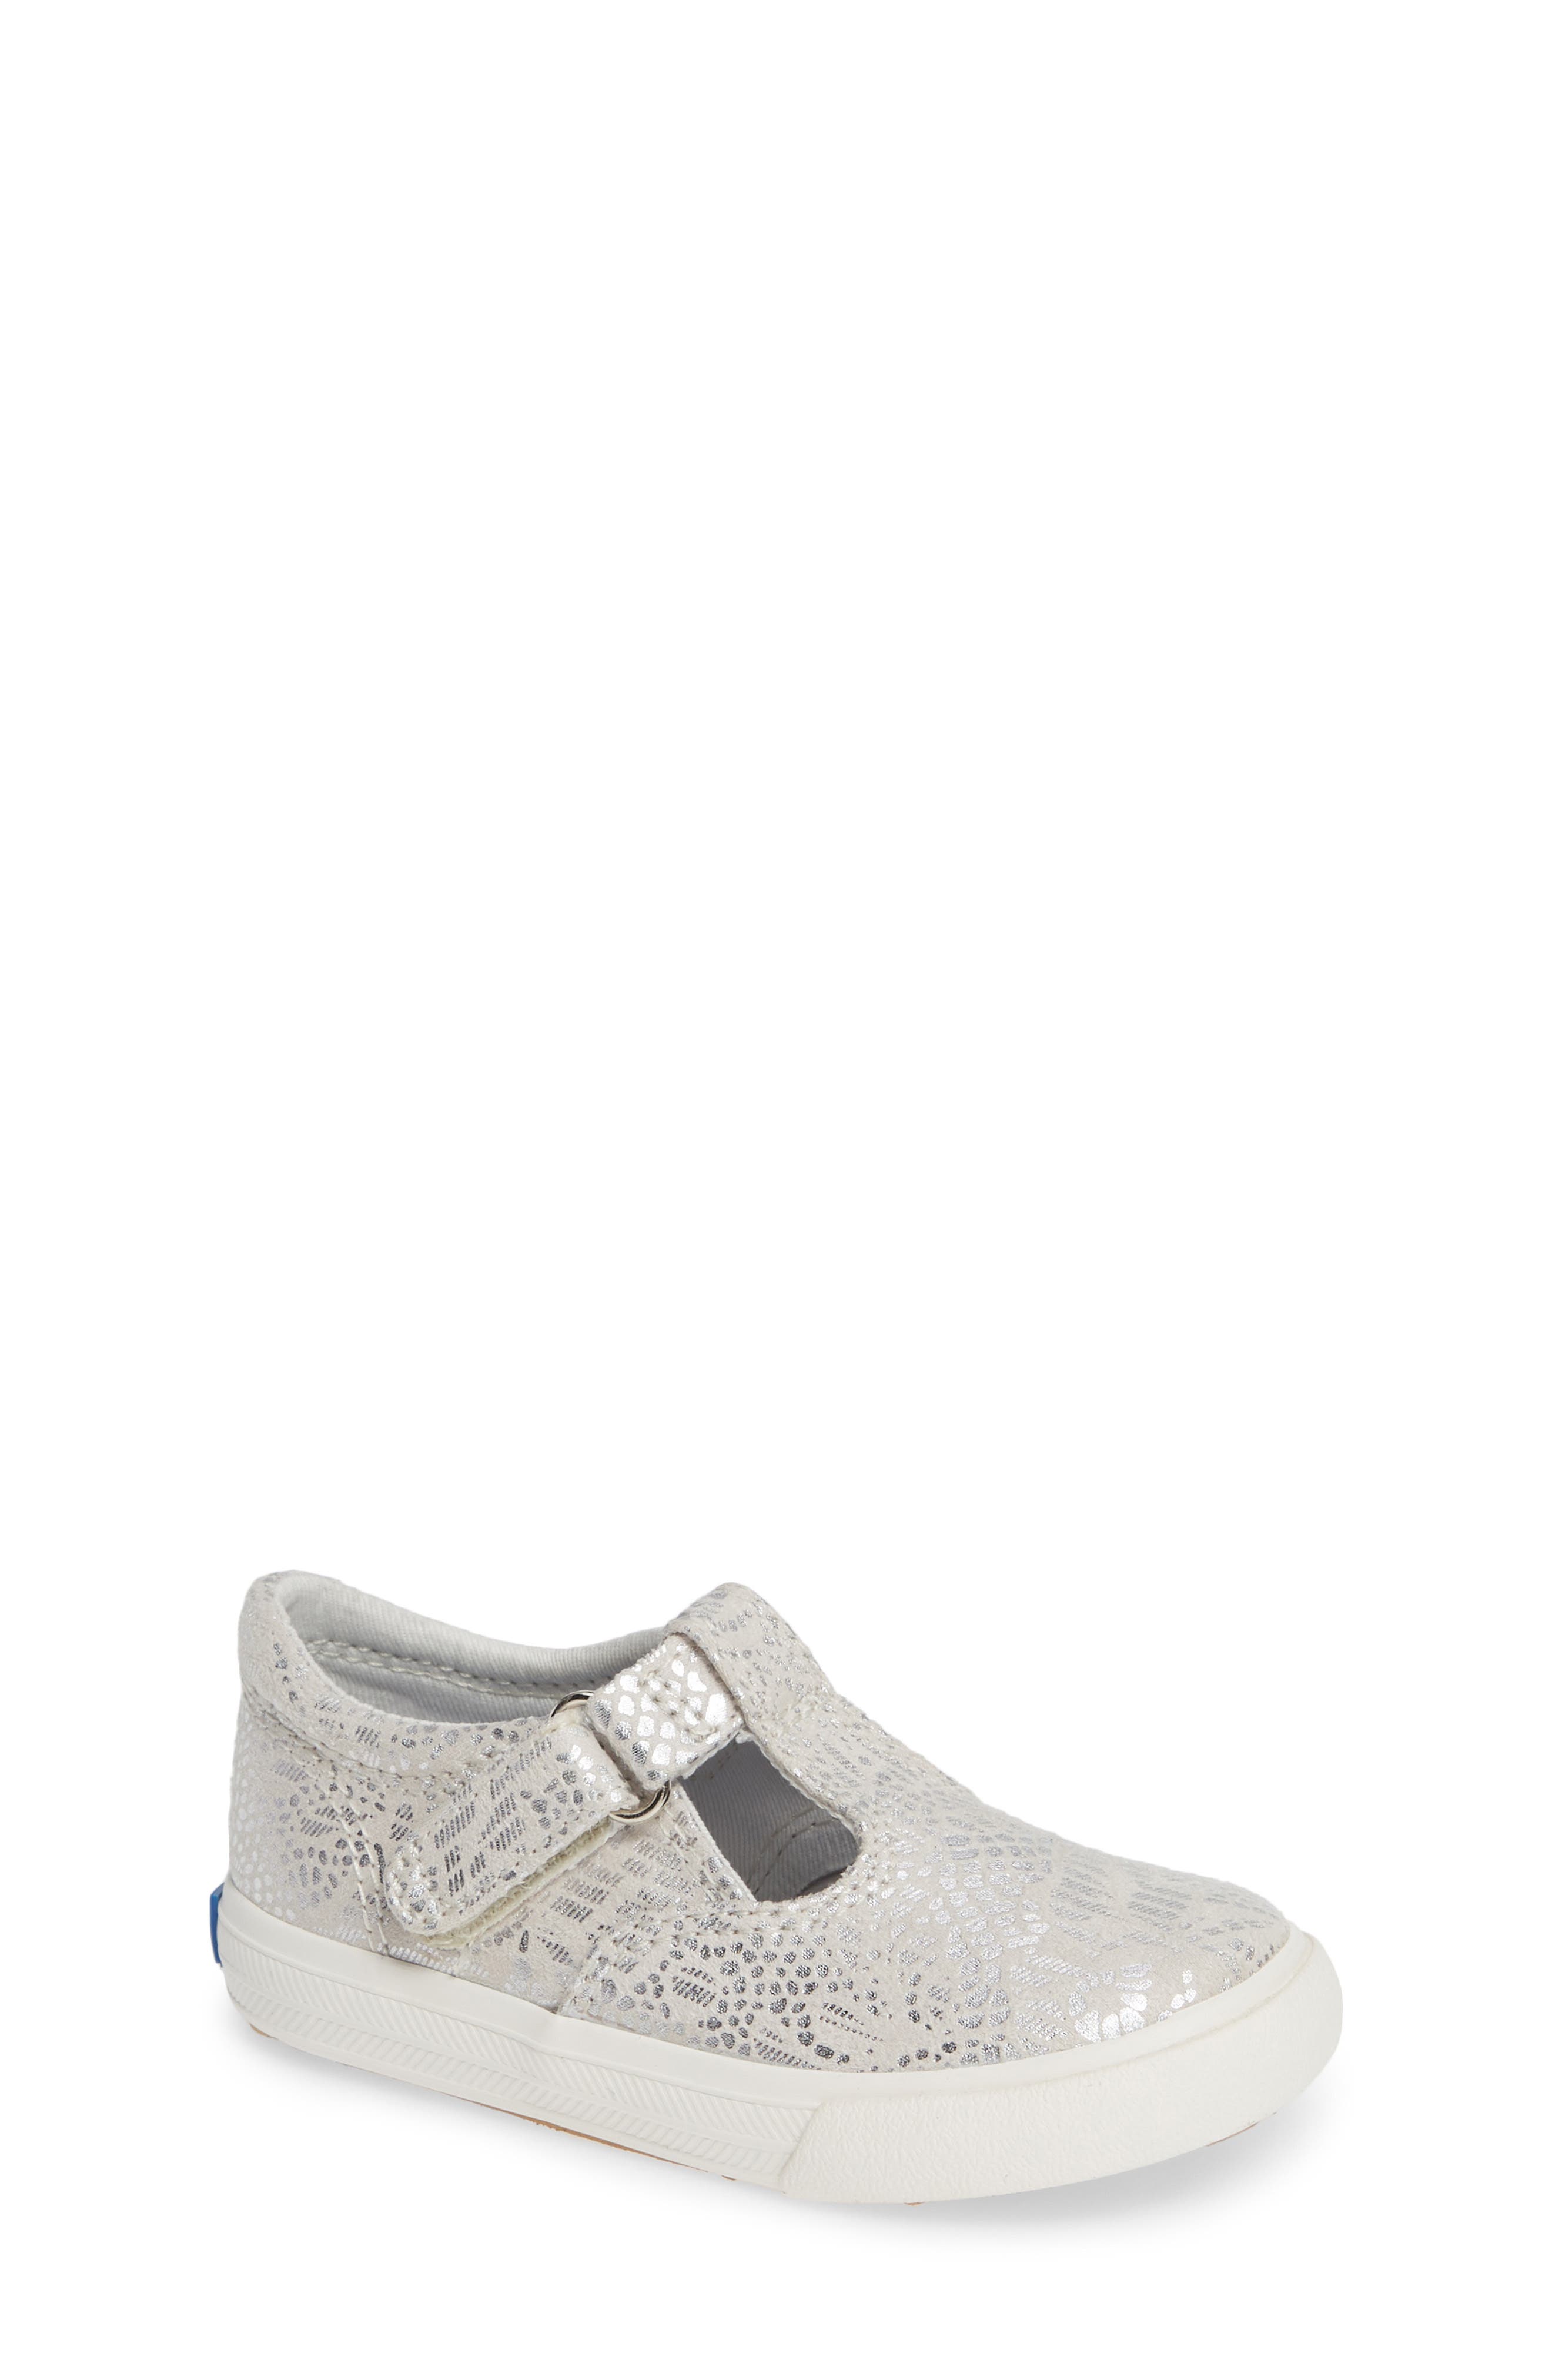 UPC 886129942267 product image for Toddler Girl's Keds Daphne T-Strap Sneaker, Size 7 M - Metallic | upcitemdb.com